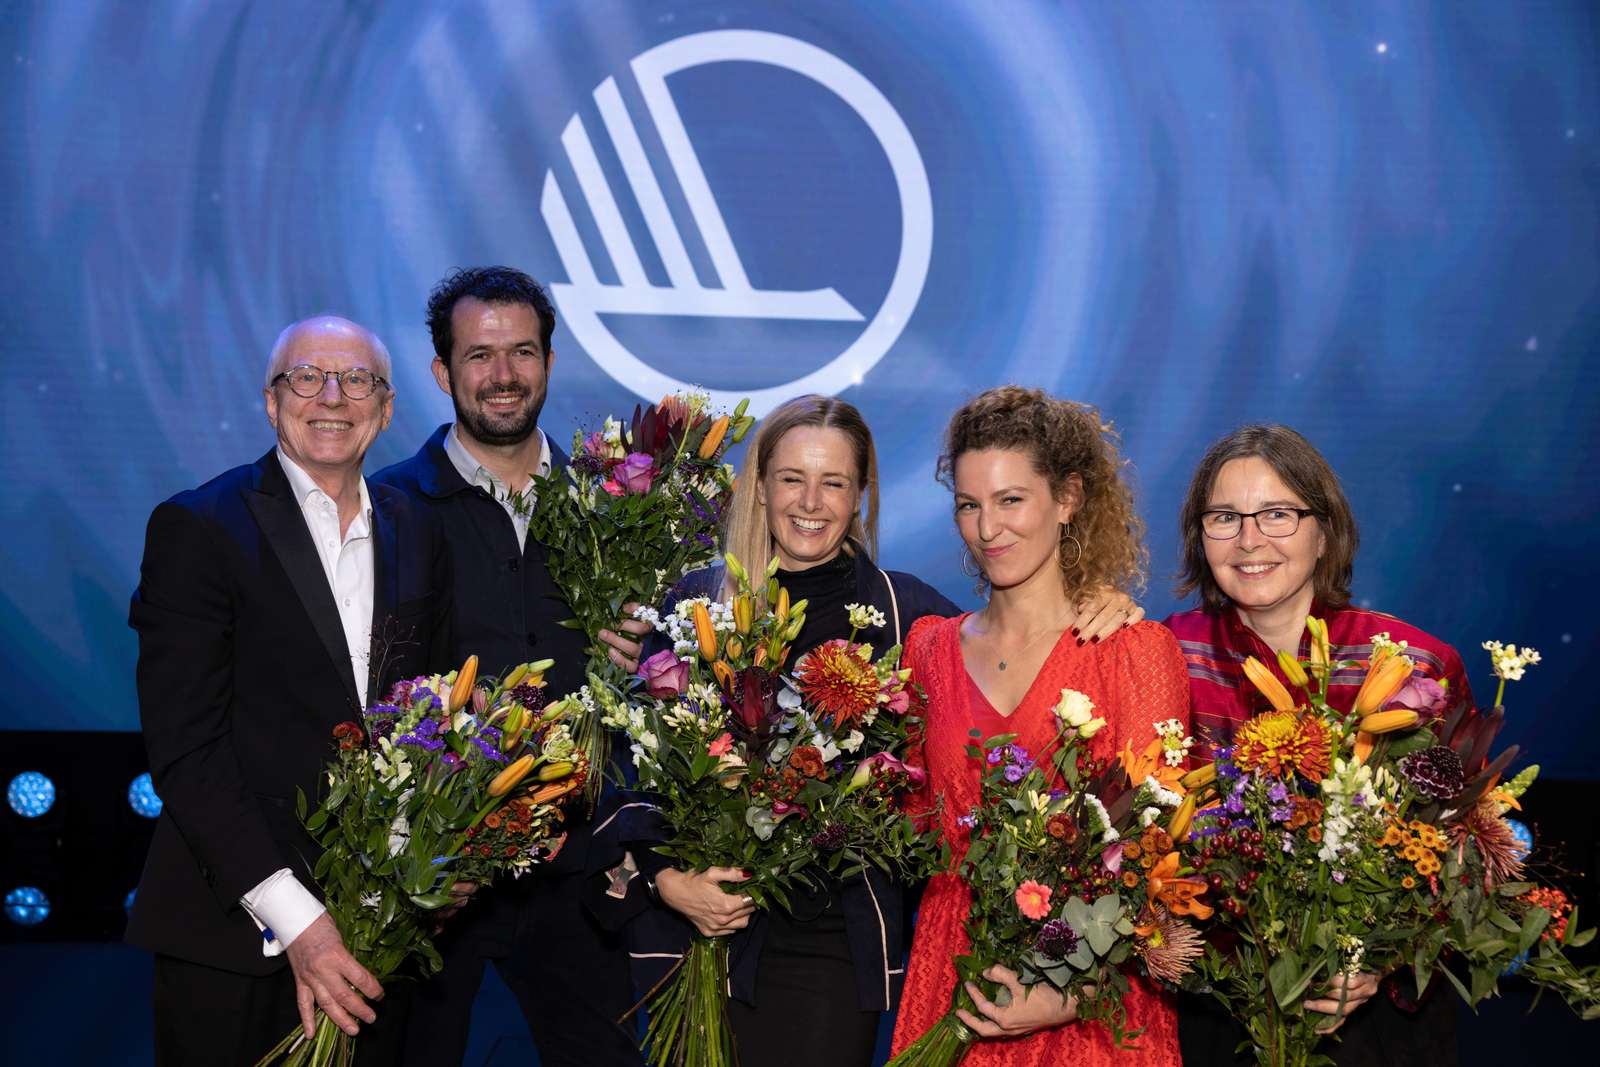 Nordic Council Film Prize 2021, winner